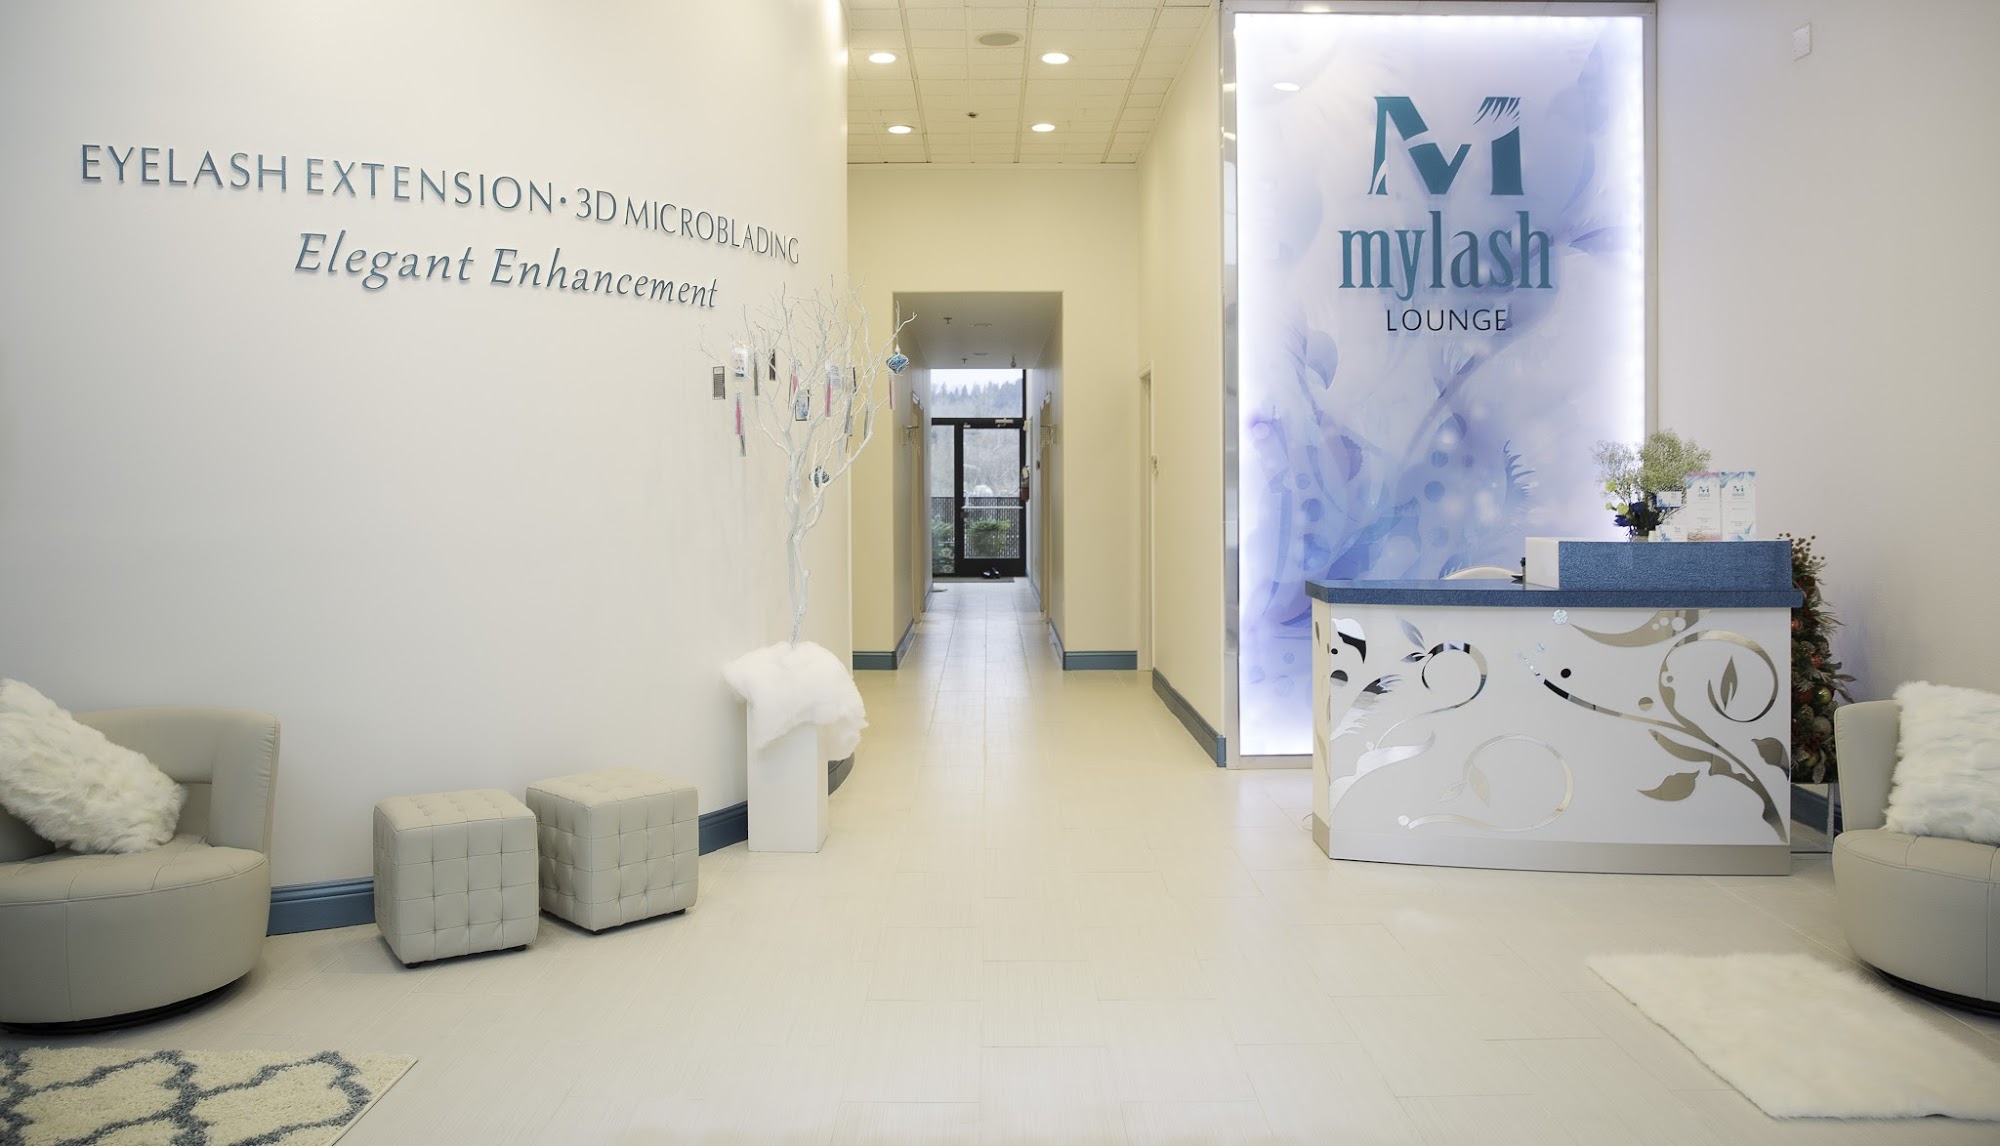 MyLash Lounge